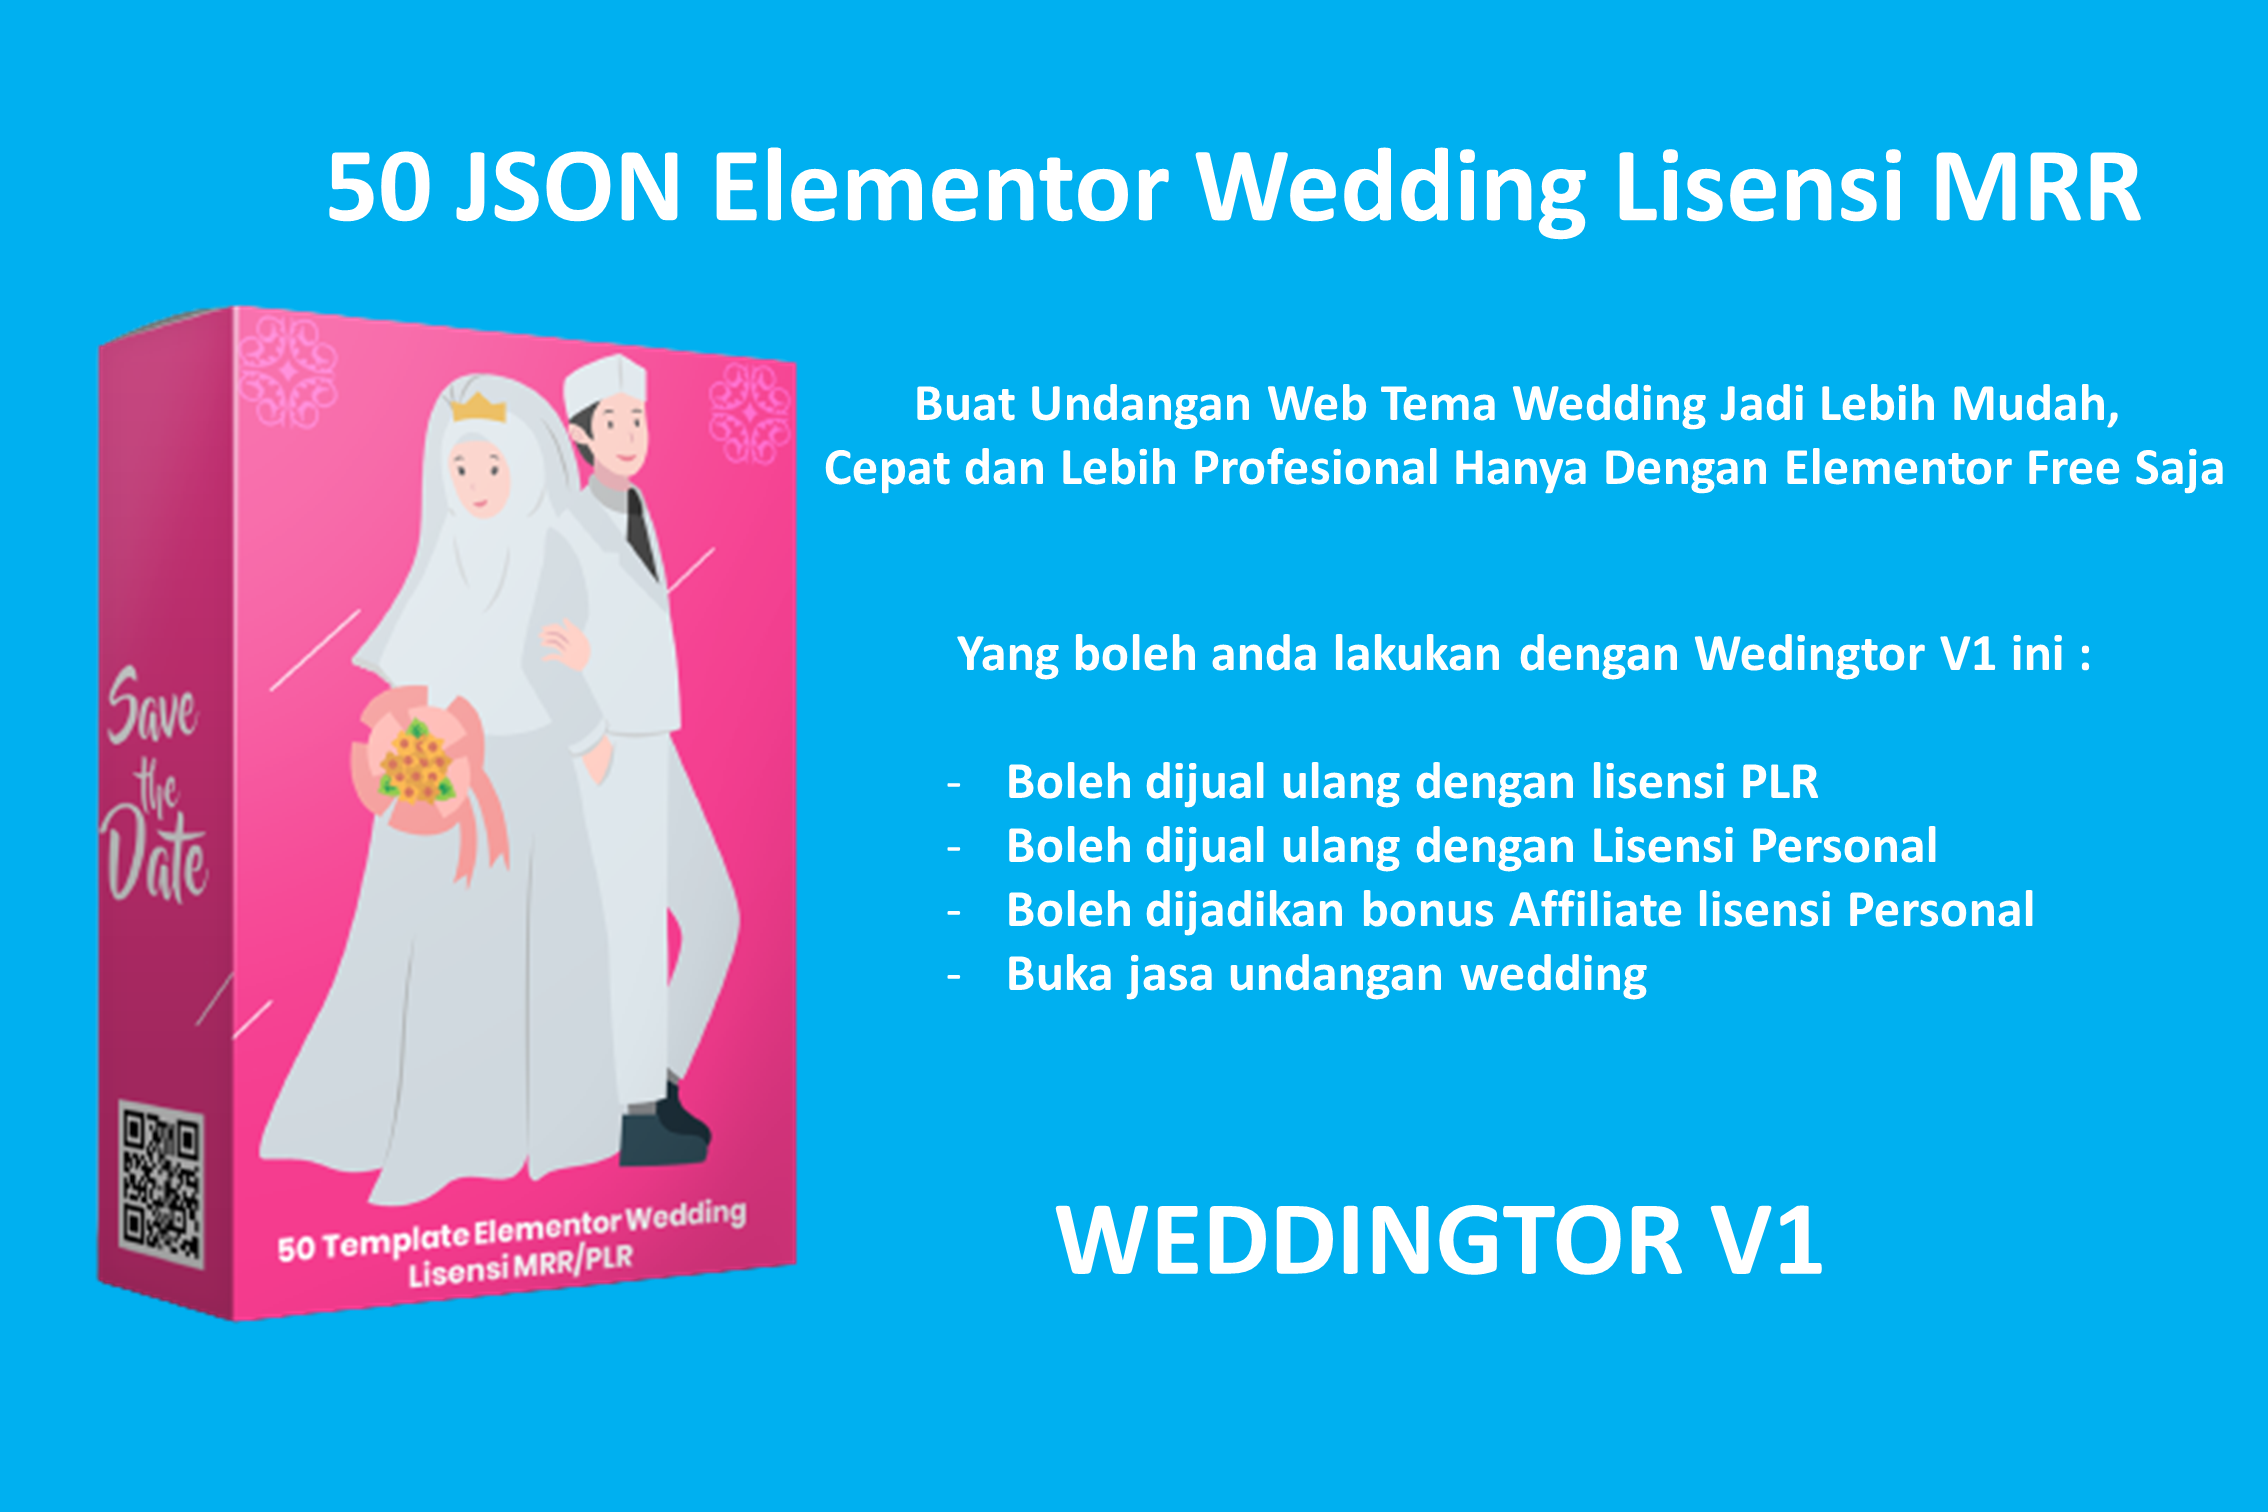 WEDDINGTOR V1 50 JSON ELEMENTOR WEDDING LISENSI MRR